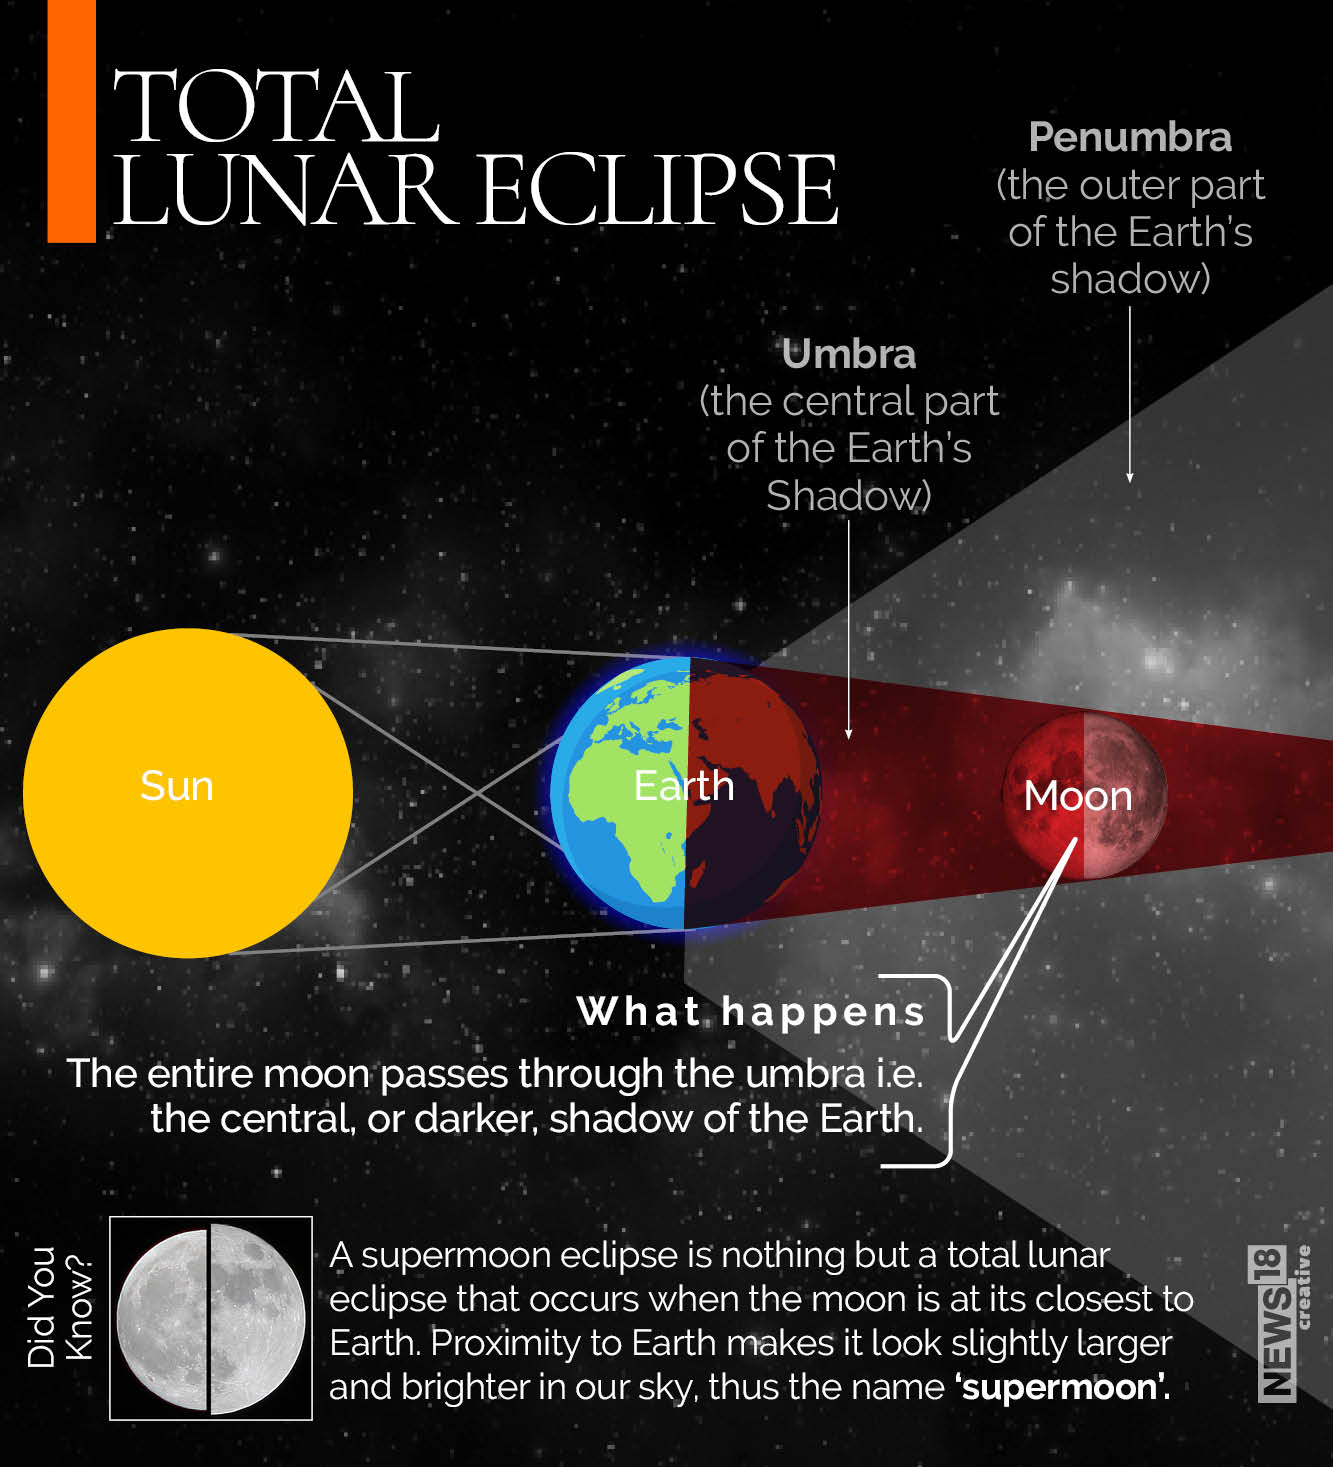 Chandra Grahan 2022 Check Lunar Eclipse Timings in Bengaluru, Chennai